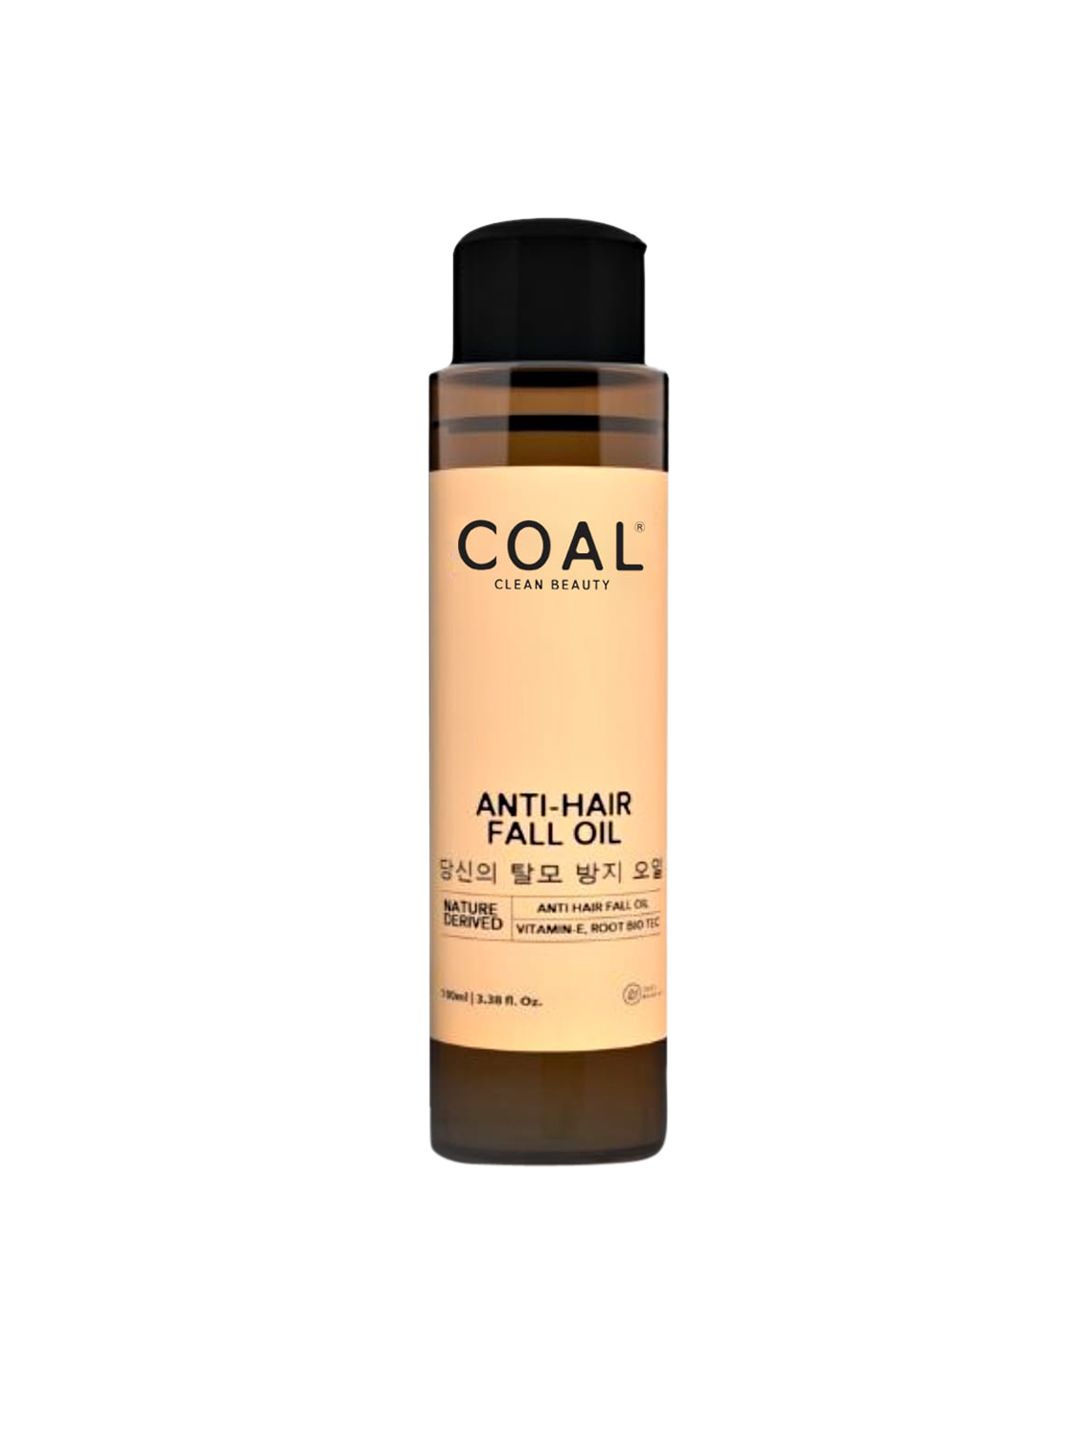 COAL CLEAN BEAUTY Anti-Hair Fall Oil Price in India